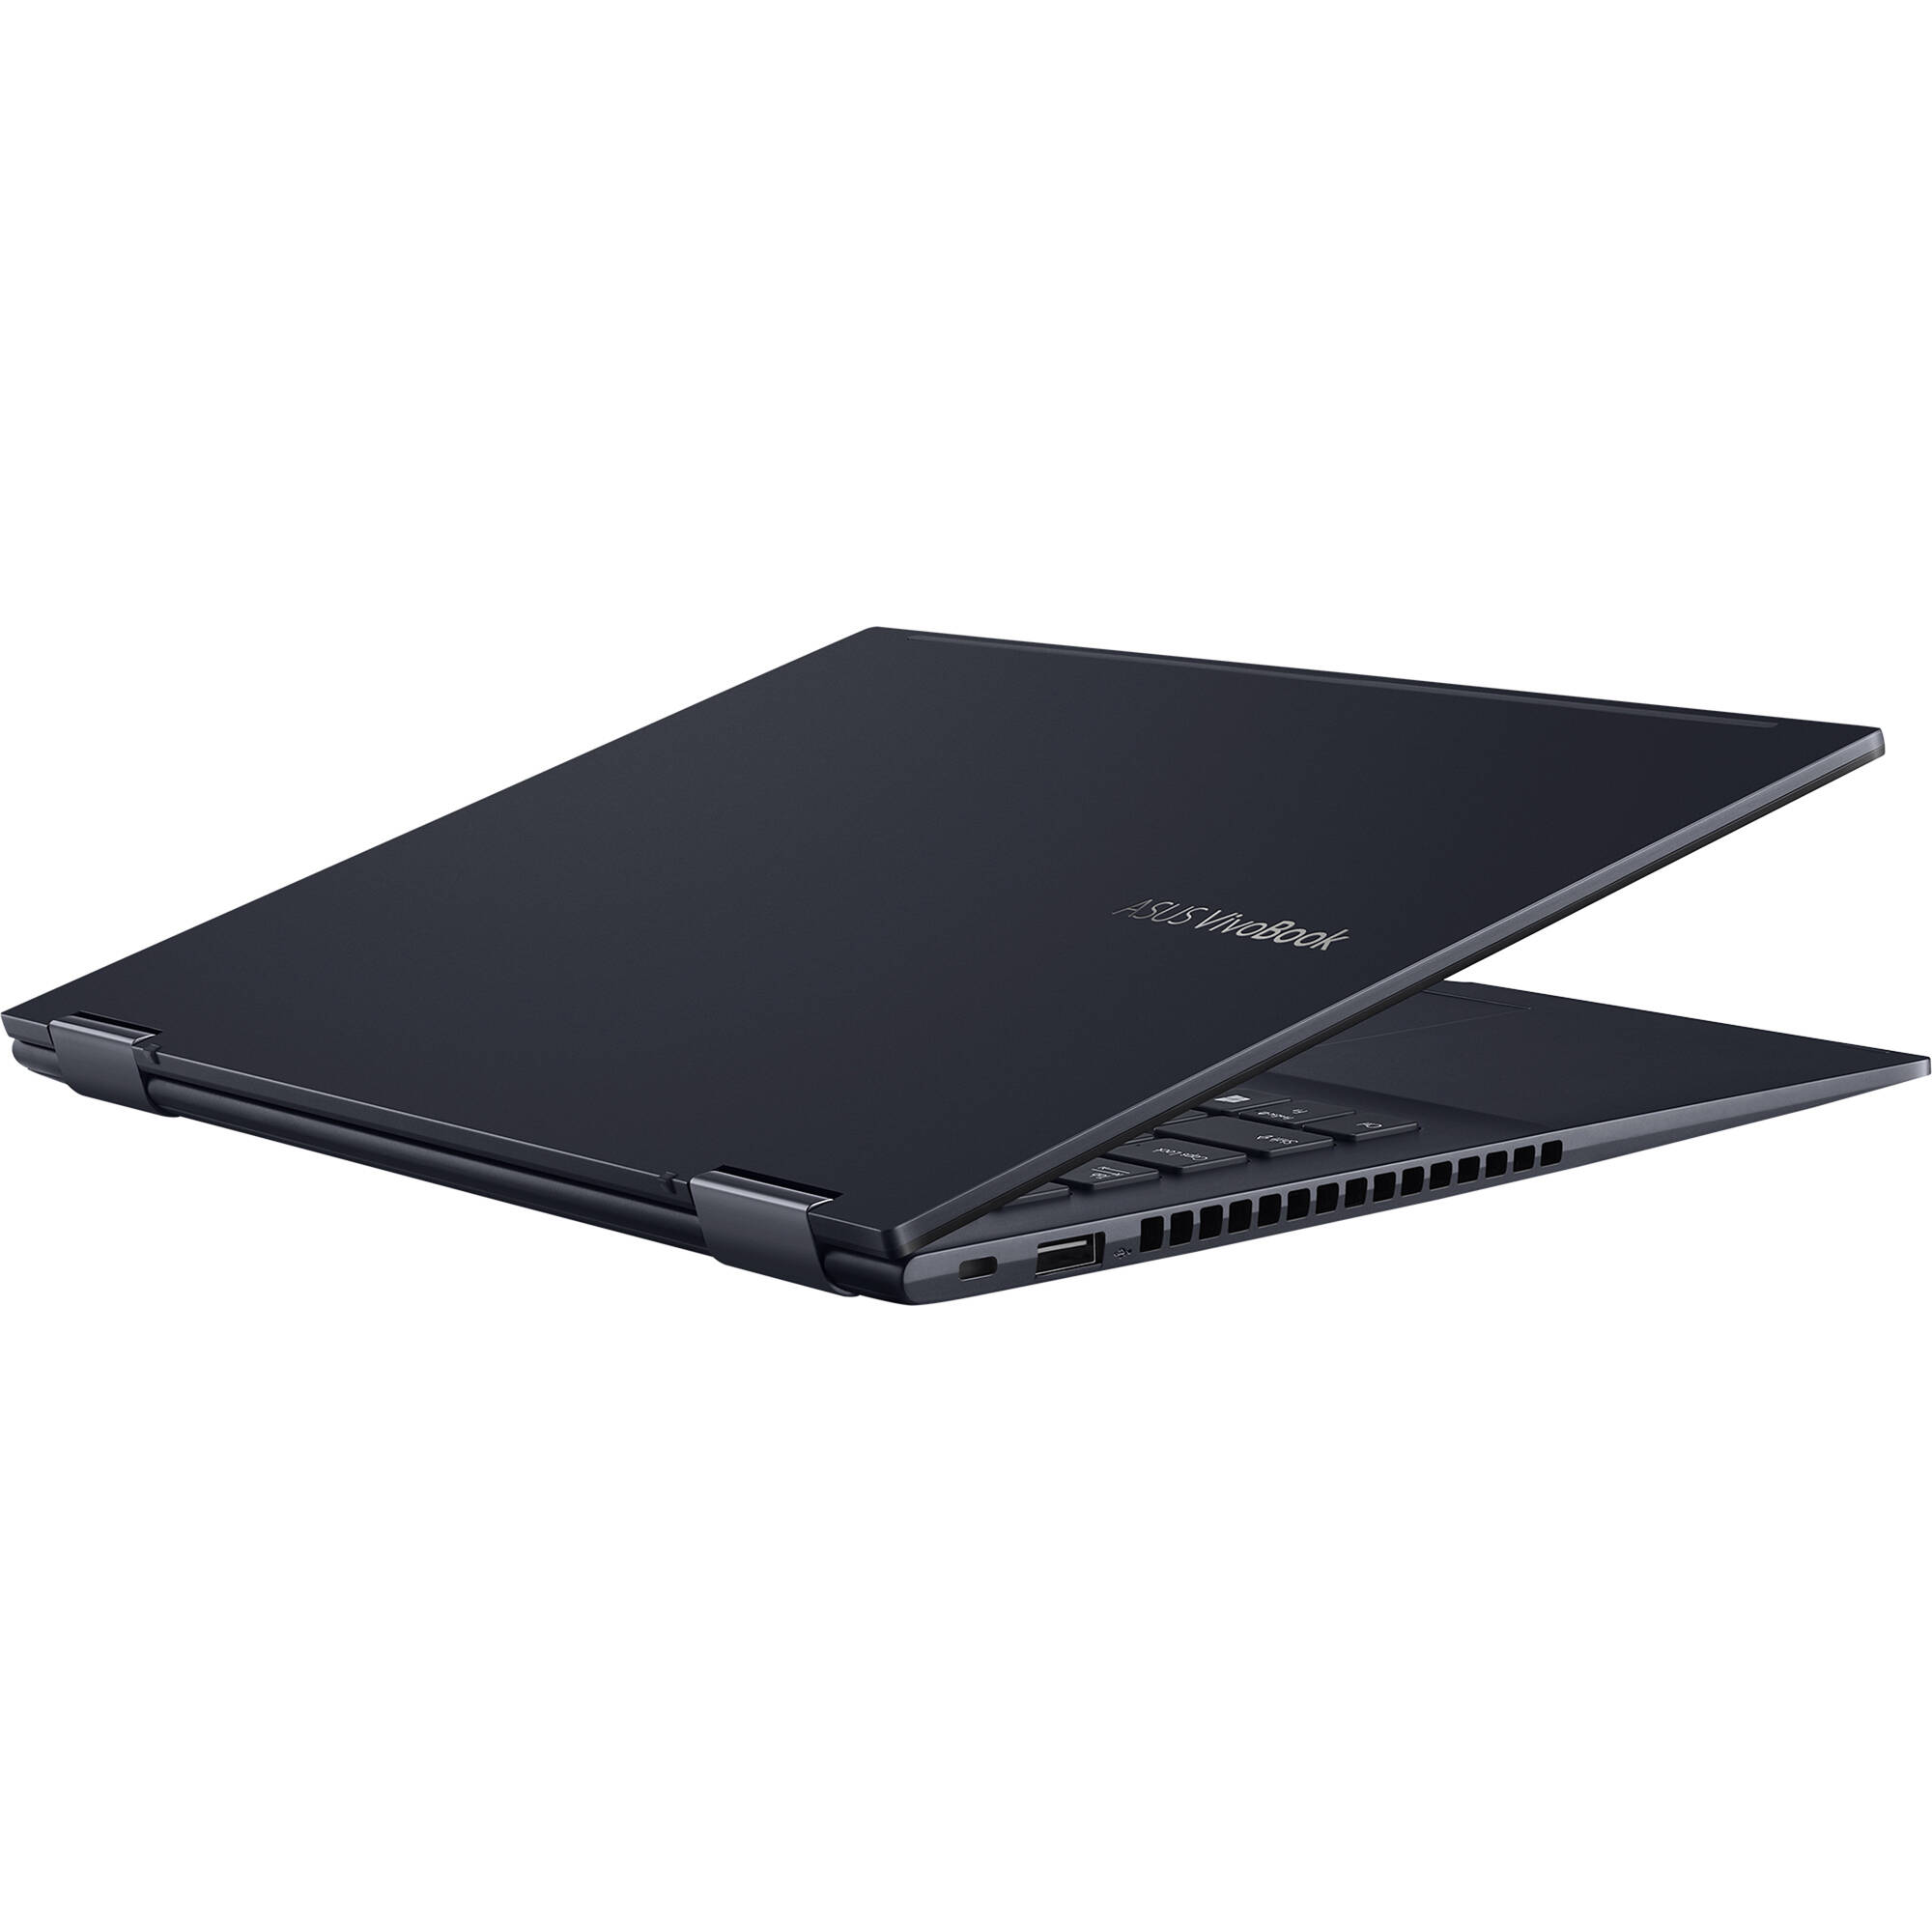 ASUS 14 "Vivobook Flip 14 TM420ua Multi-touch 2-in-1 Laptop (Black a medida)